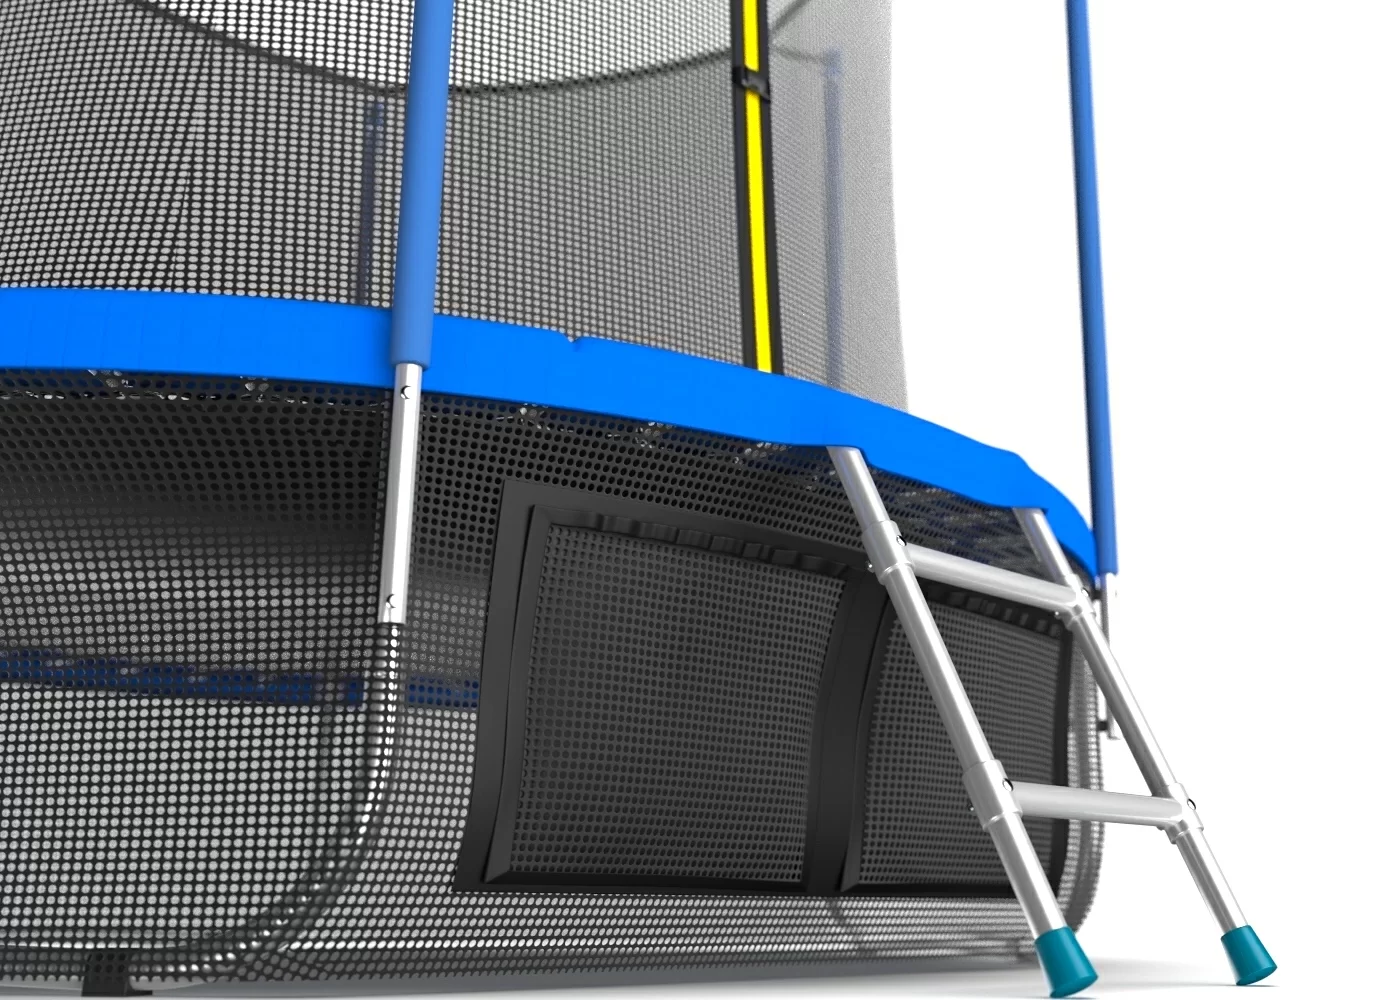 Фото EVO JUMP Internal 10ft (Sky). Батут с внутренней сеткой и лестницей, диаметр 10ft (синий) + нижняя сеть со склада магазина СпортСЕ